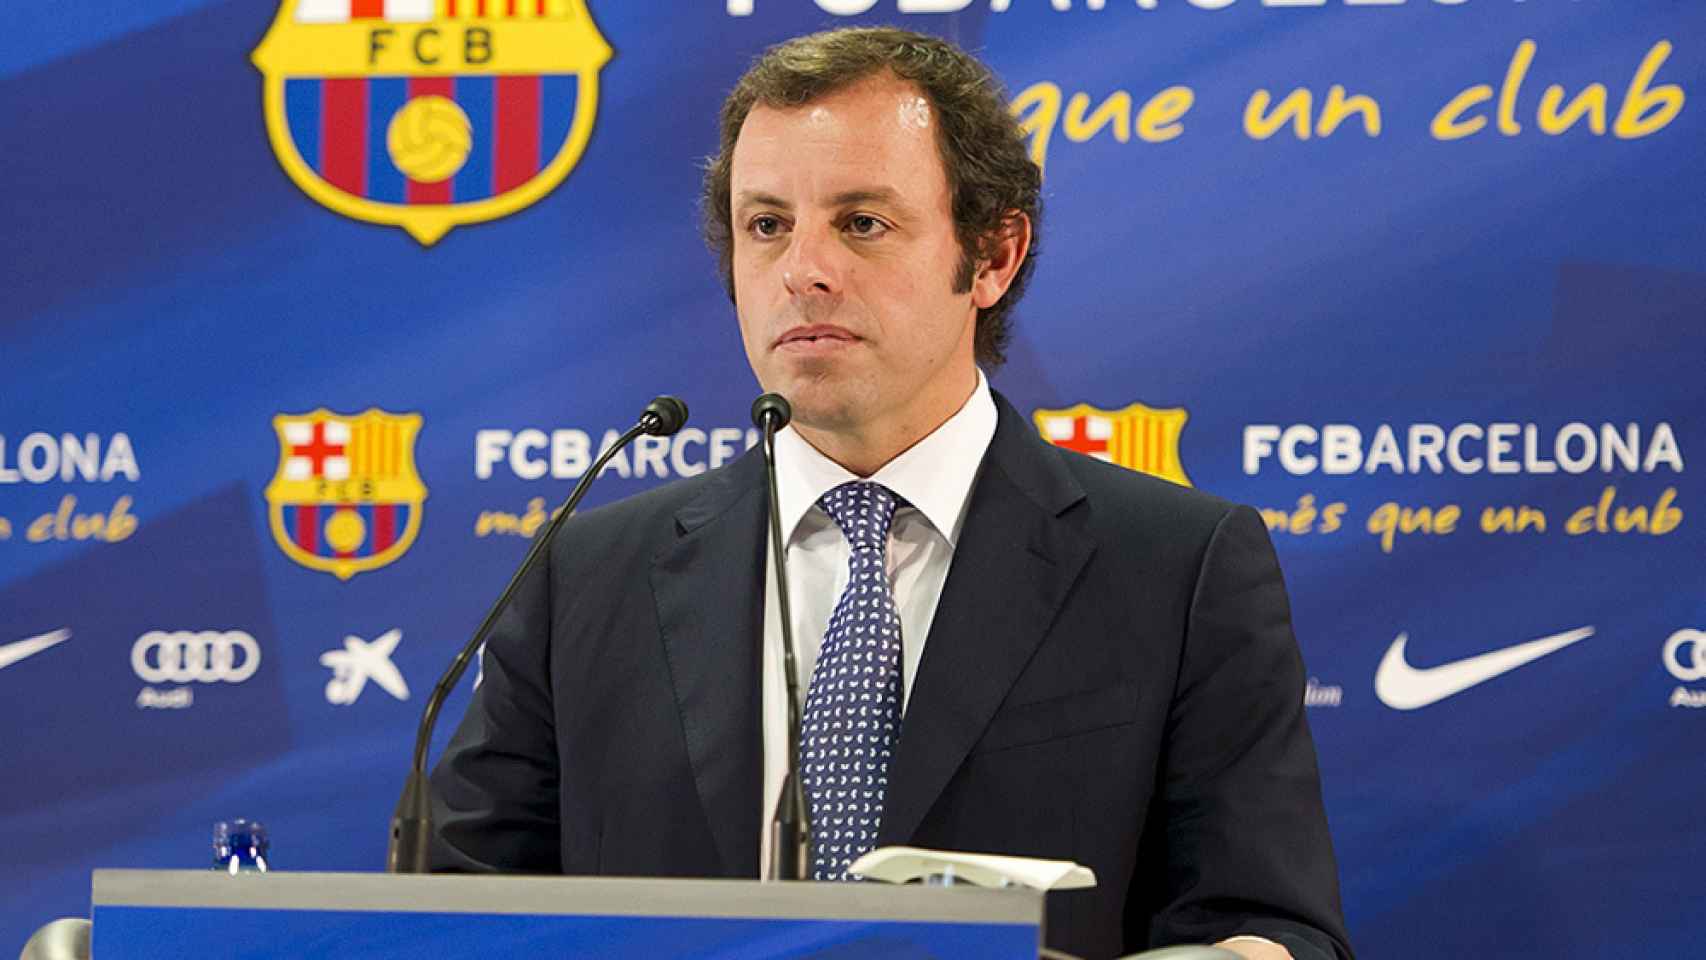 El expresidente del FC Barcelona Sandro Rosell